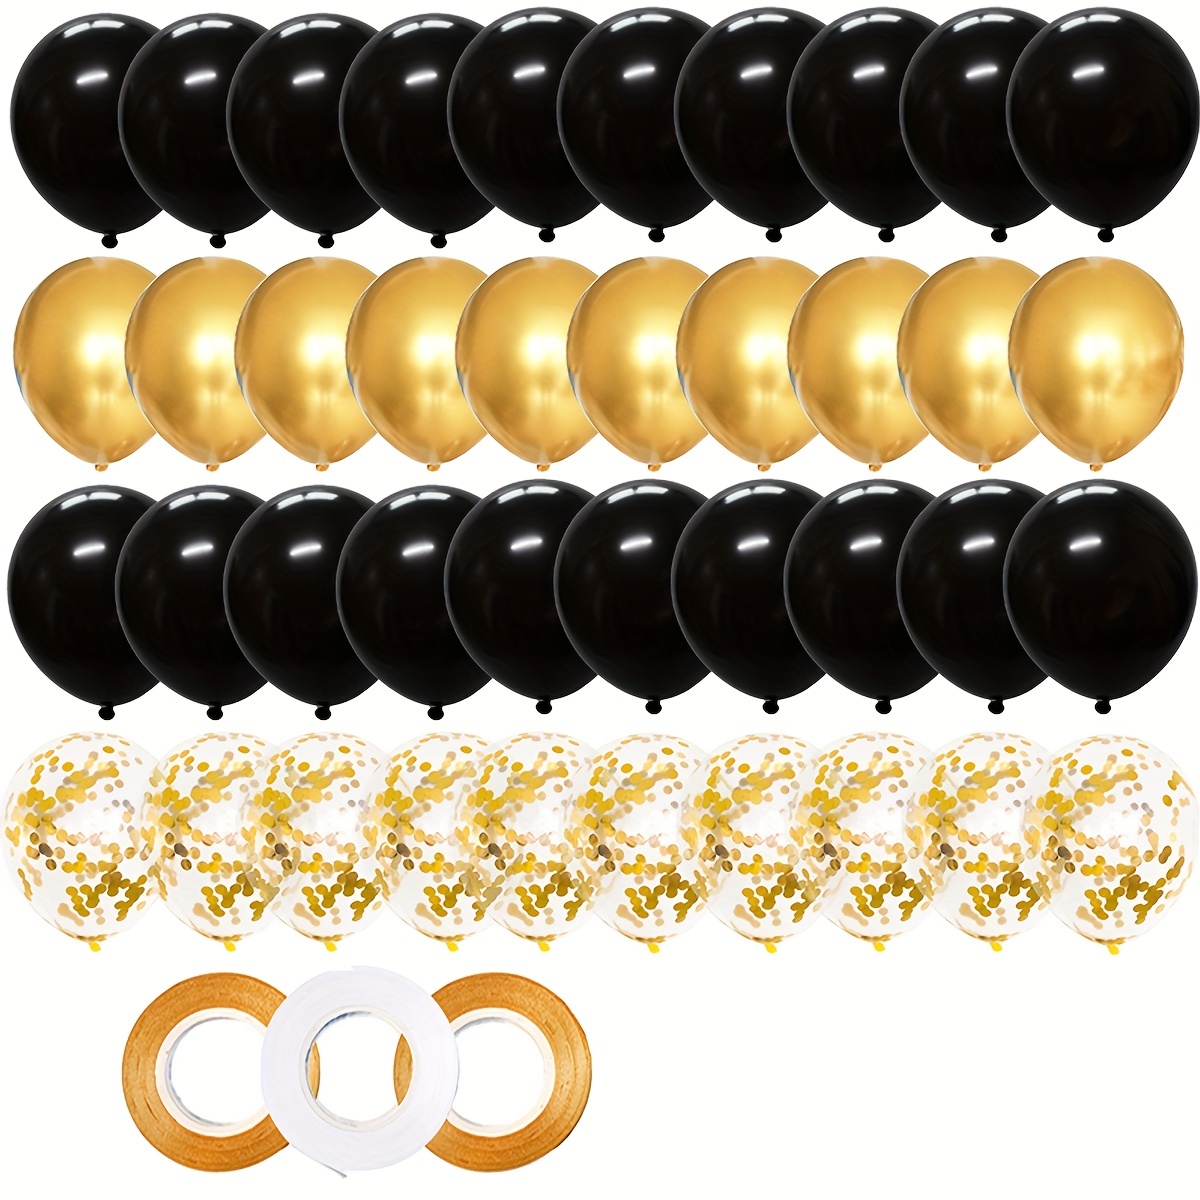 

40pcs, 12inch Golden Black Mixed Balloons And 3pcs Balloon Ribbons, Birthday, Graduation, New Years Party Decoration